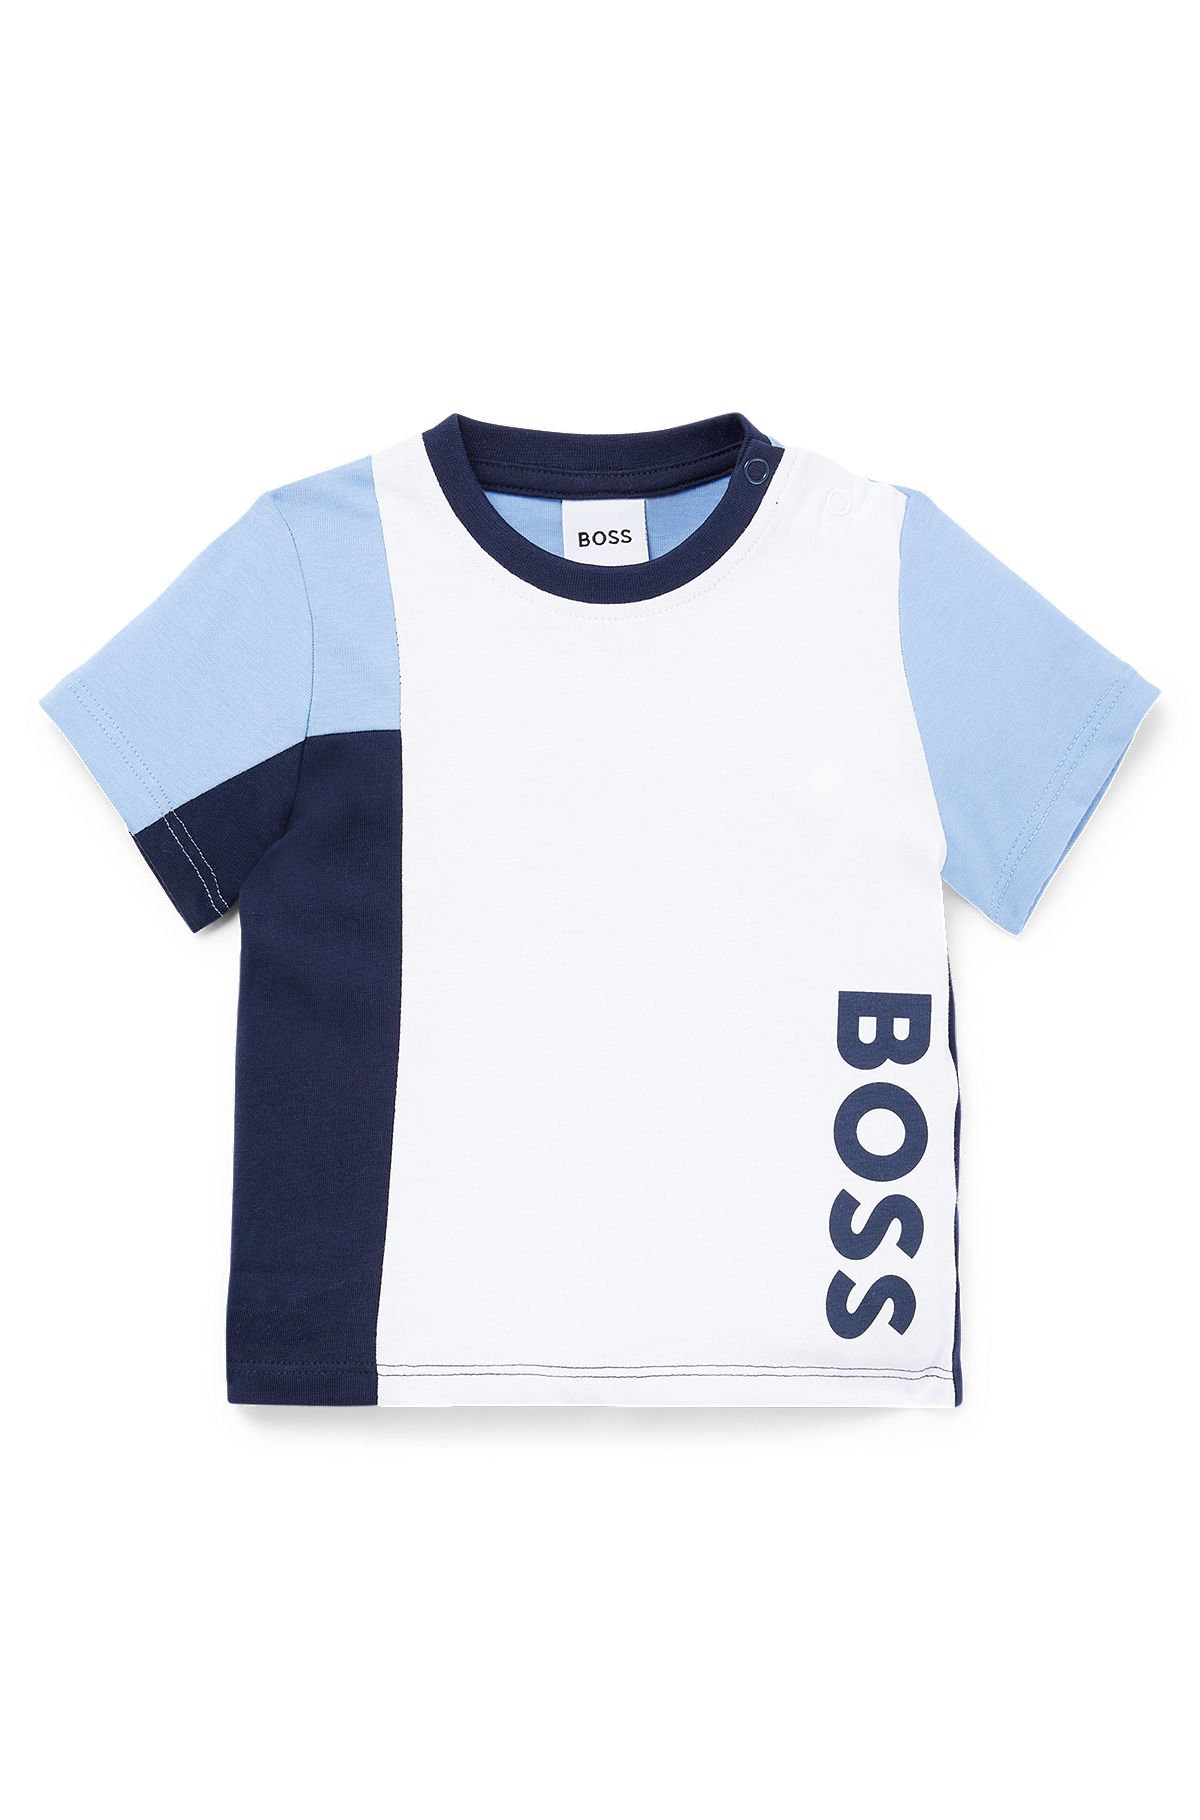 HUGO BOSS Kids | Kids clothes online now